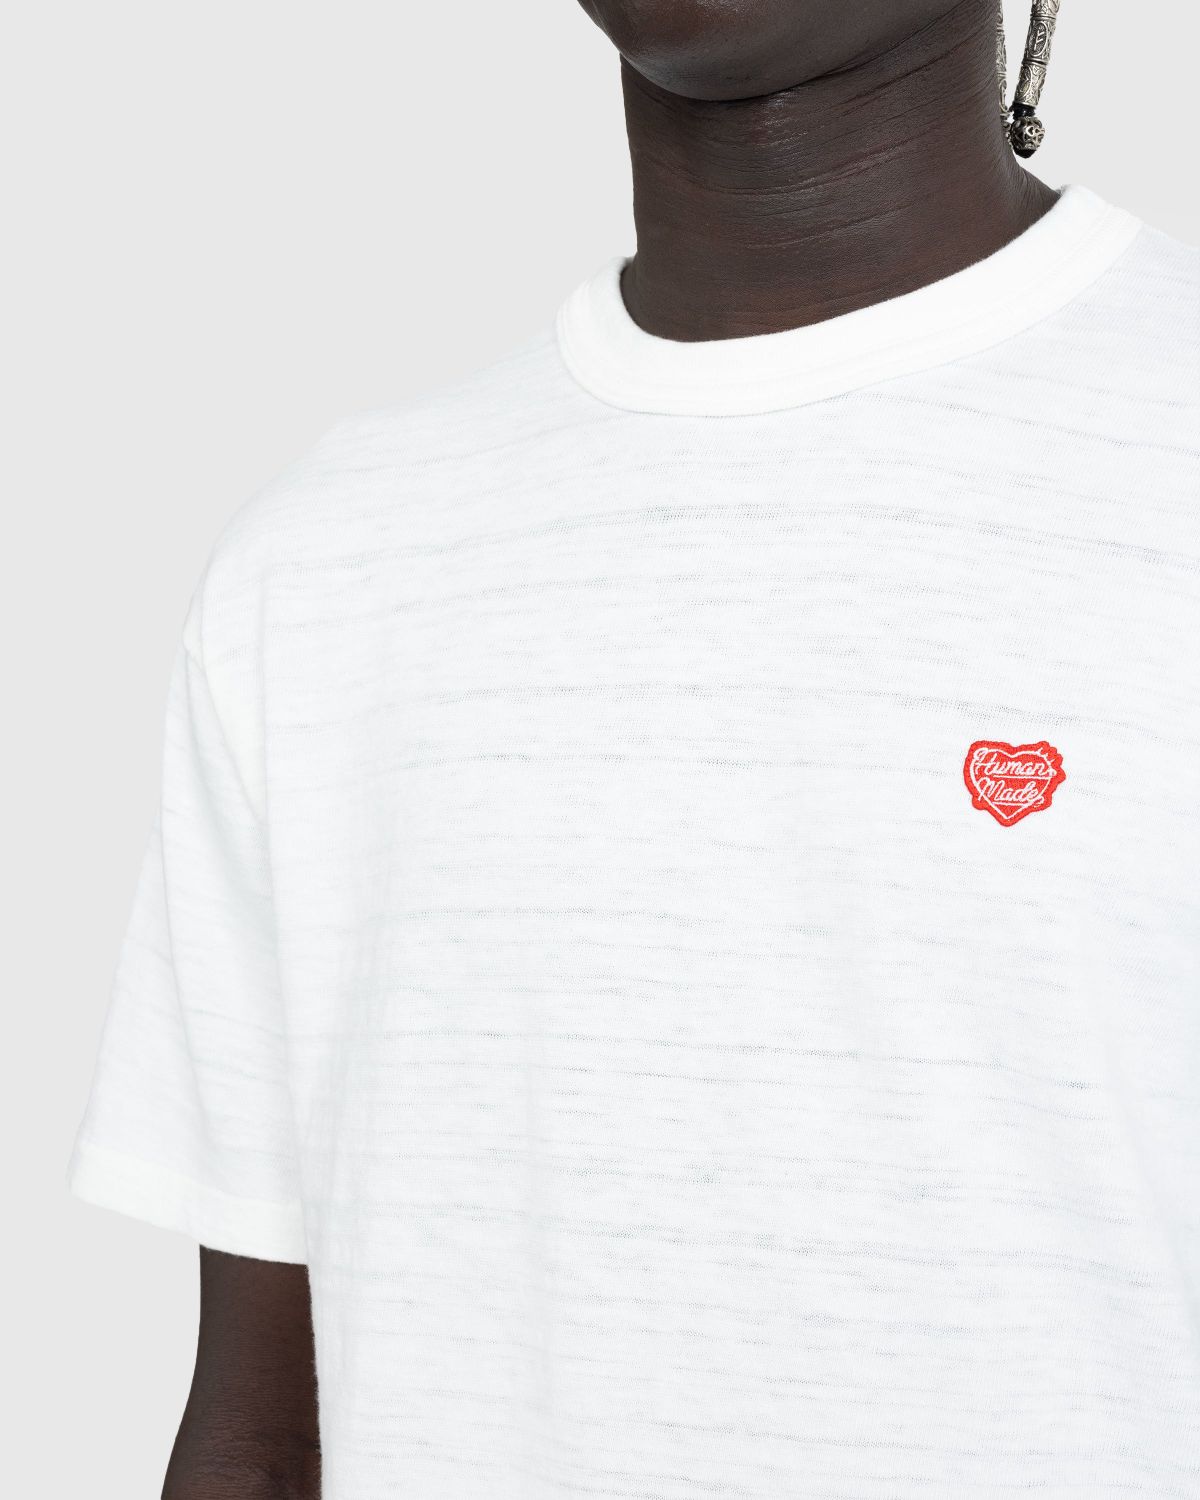 HUMAN MADE HEART BADGE T-SHIRT WHITE 3XL